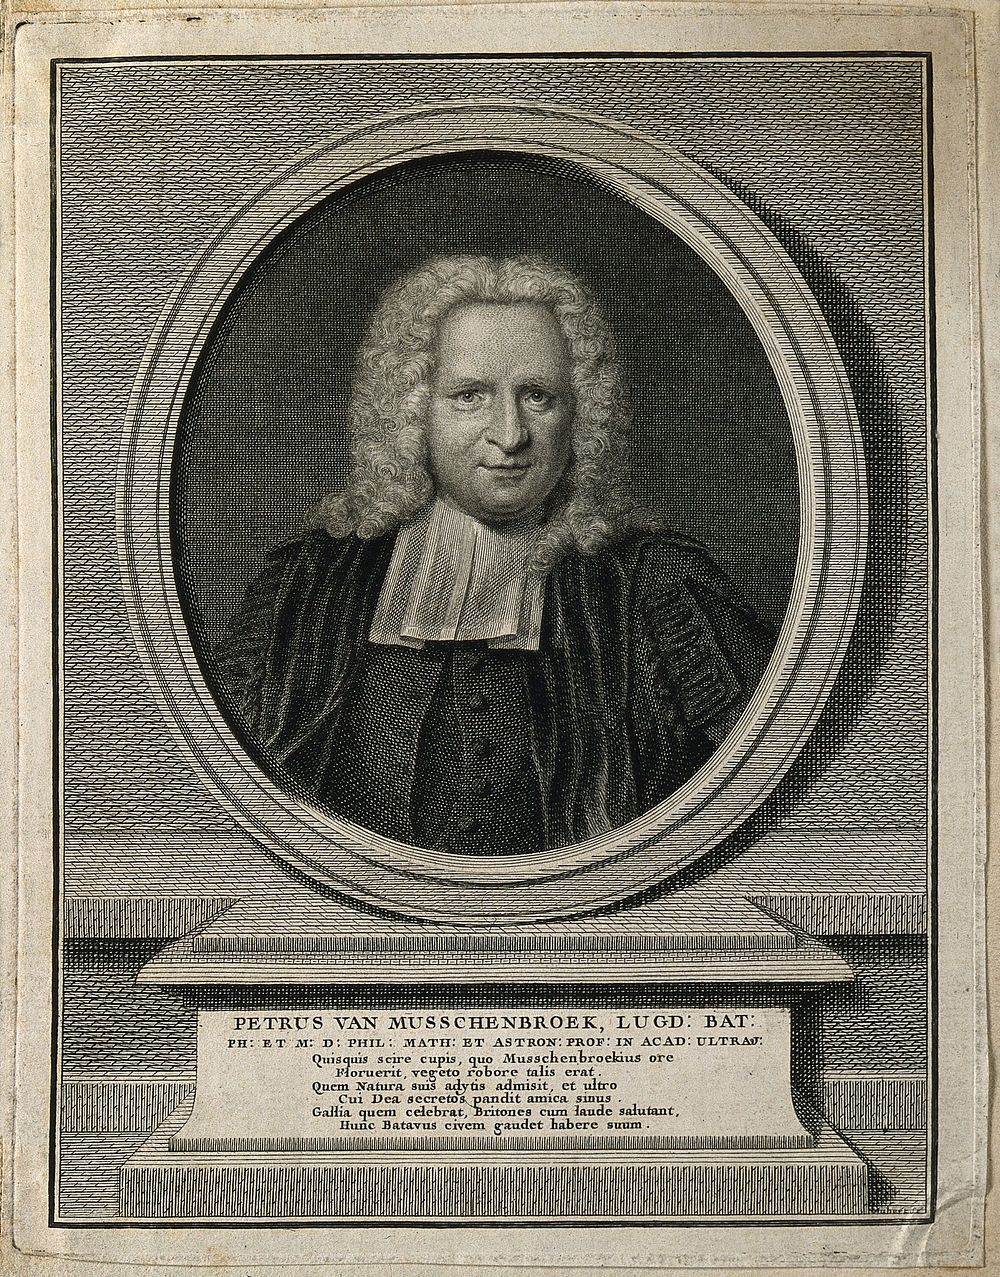 Pieter van Musschenbroek. Line engraving by Hubert after J. M. Quinkhard, 1738.